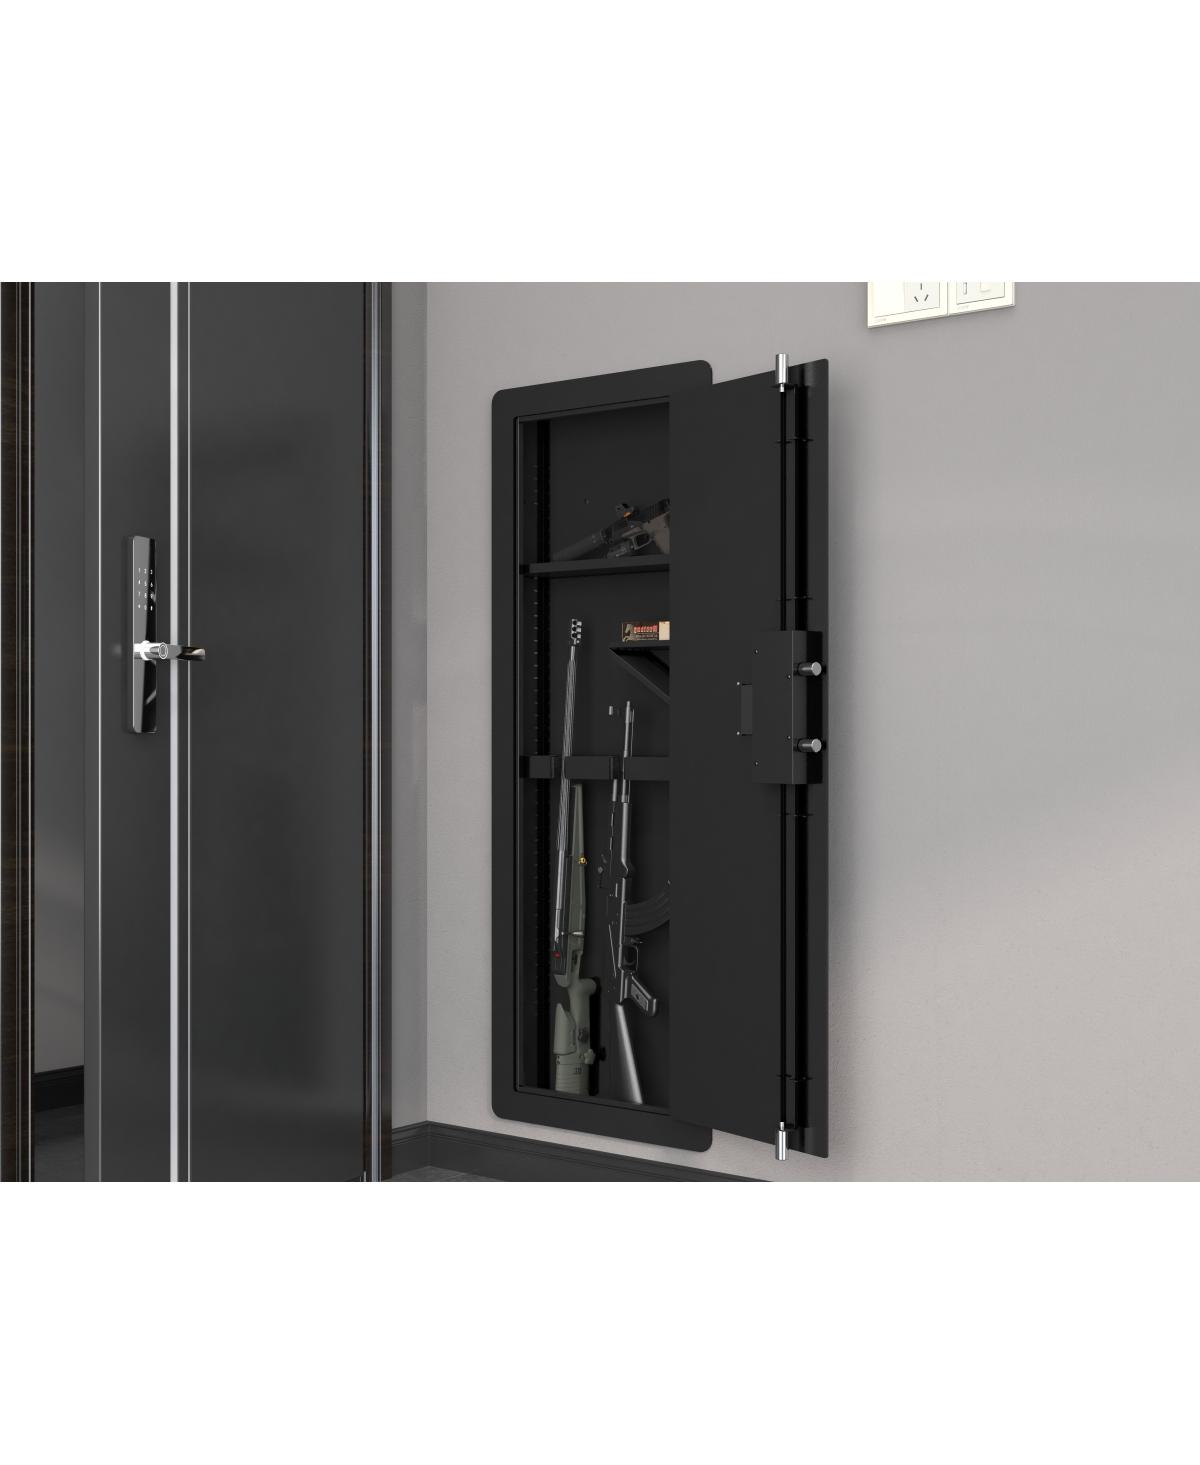 Secure Wall-Mounted Hidden Safe - Keypad Entry - Black